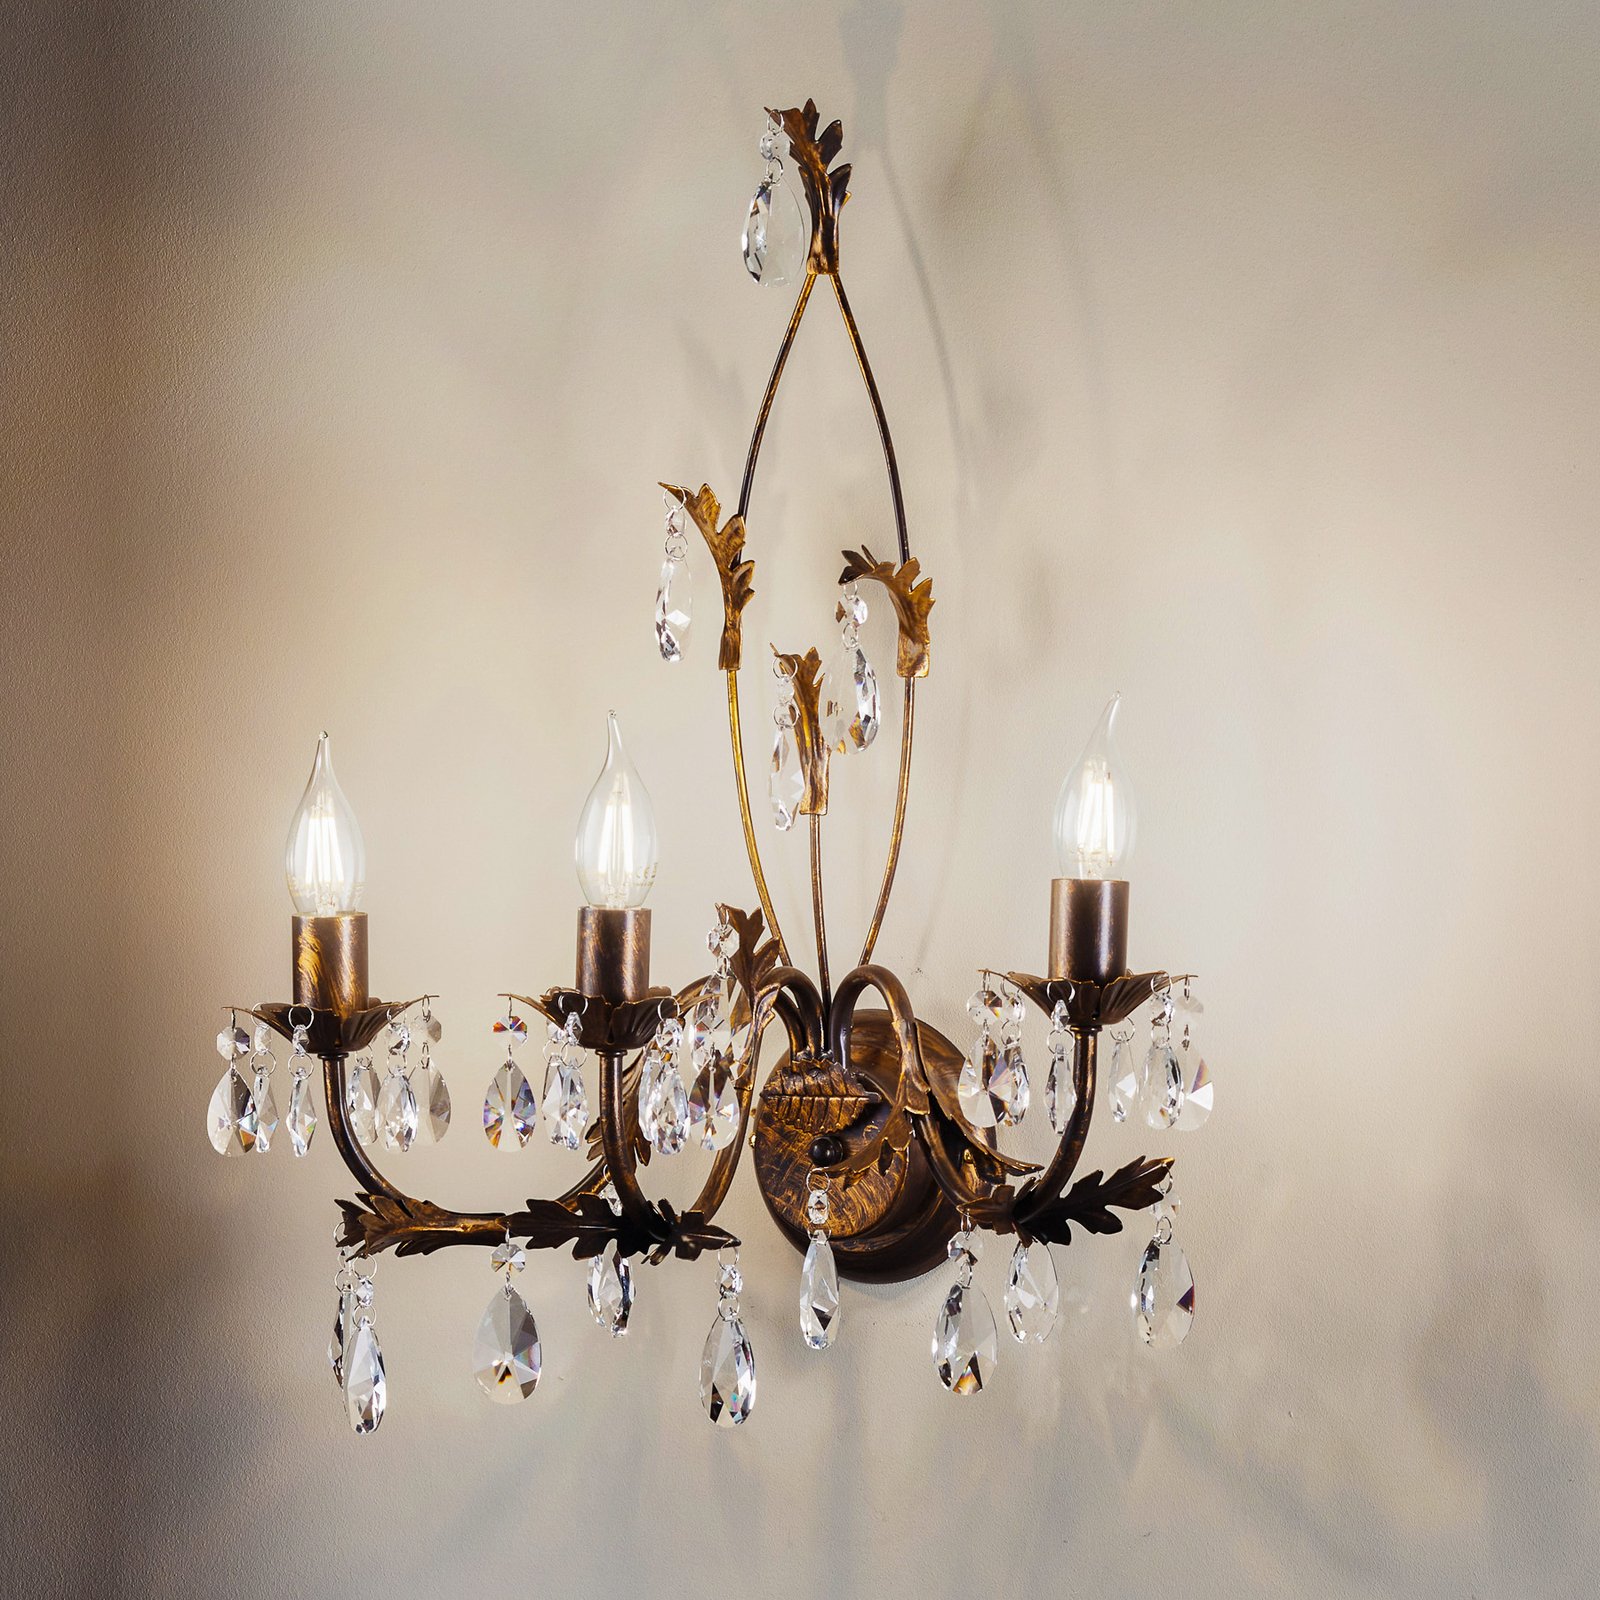 Teresa wall light as a chandelier, 3-bulb